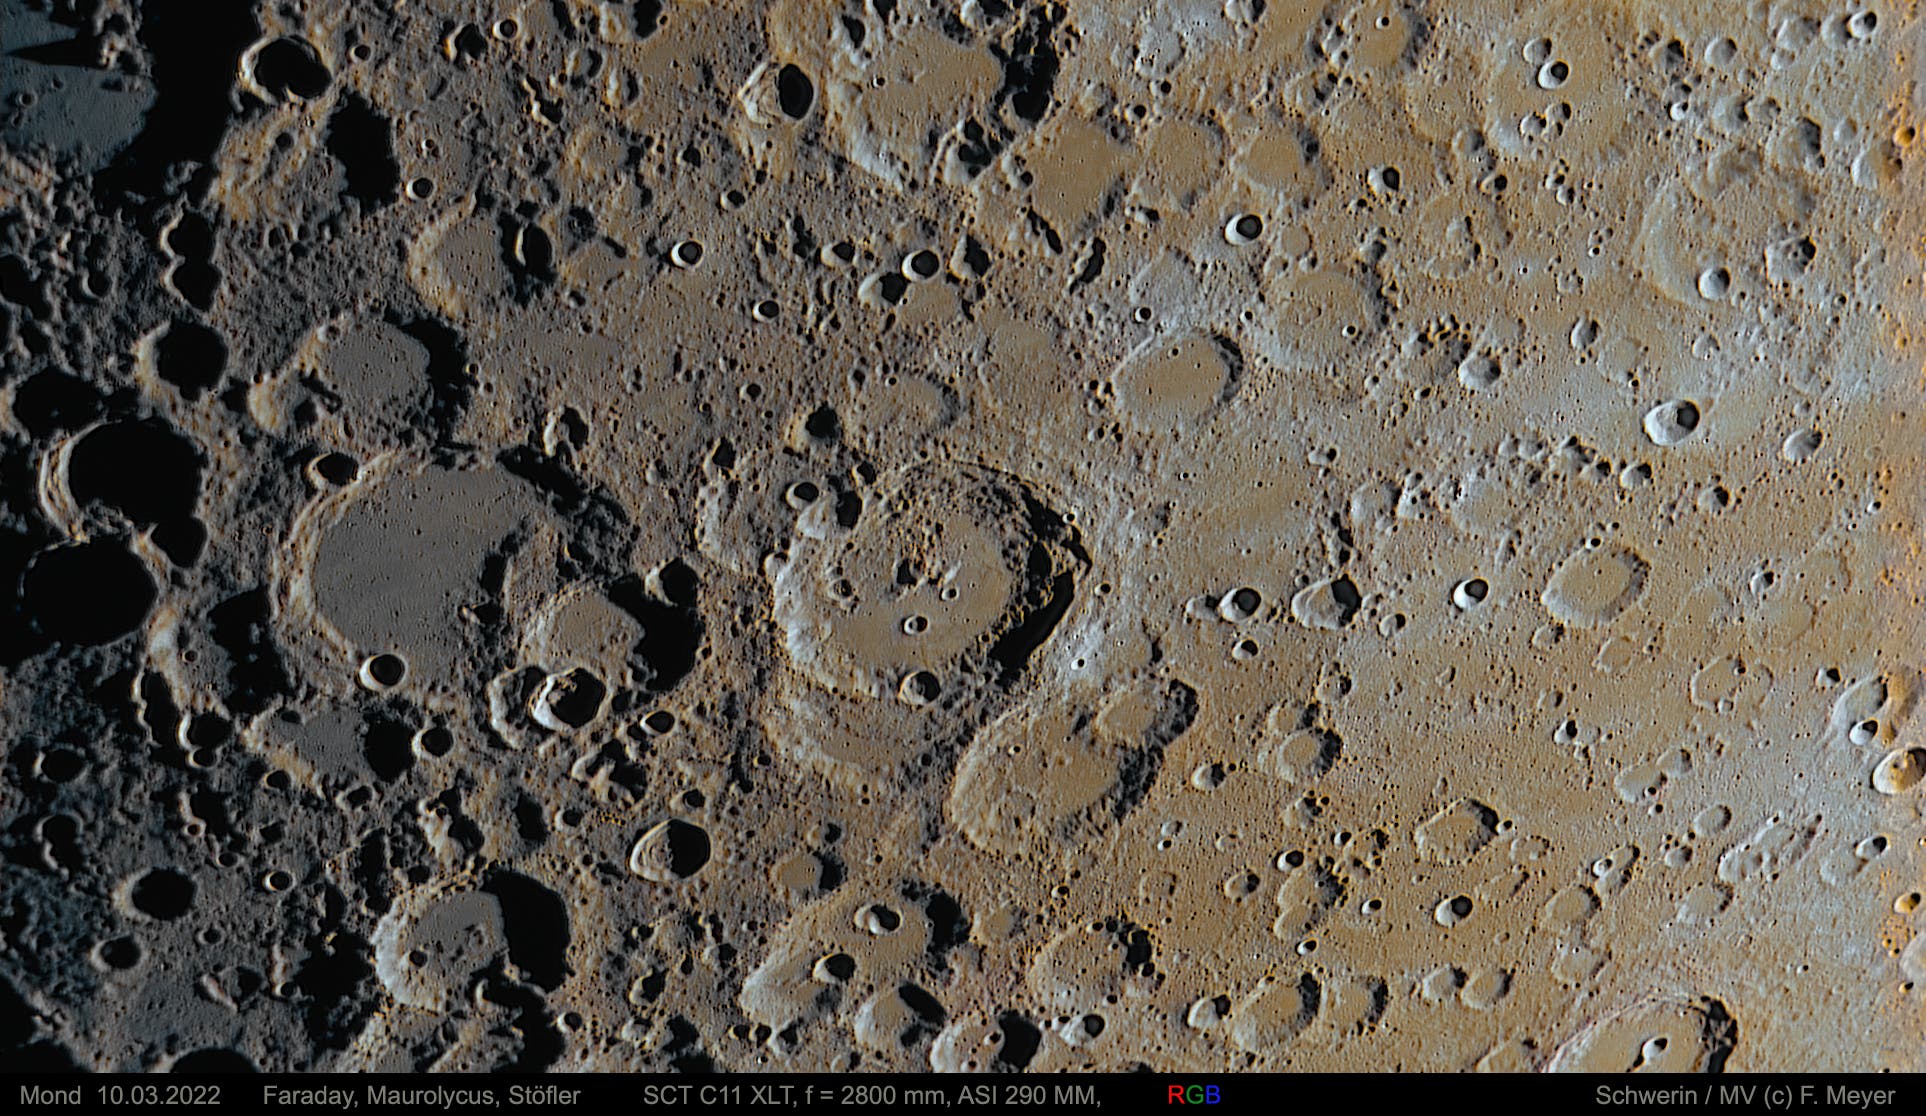 Mond, Faraday, Maurolycus, Stöffler am 10. März 2022 